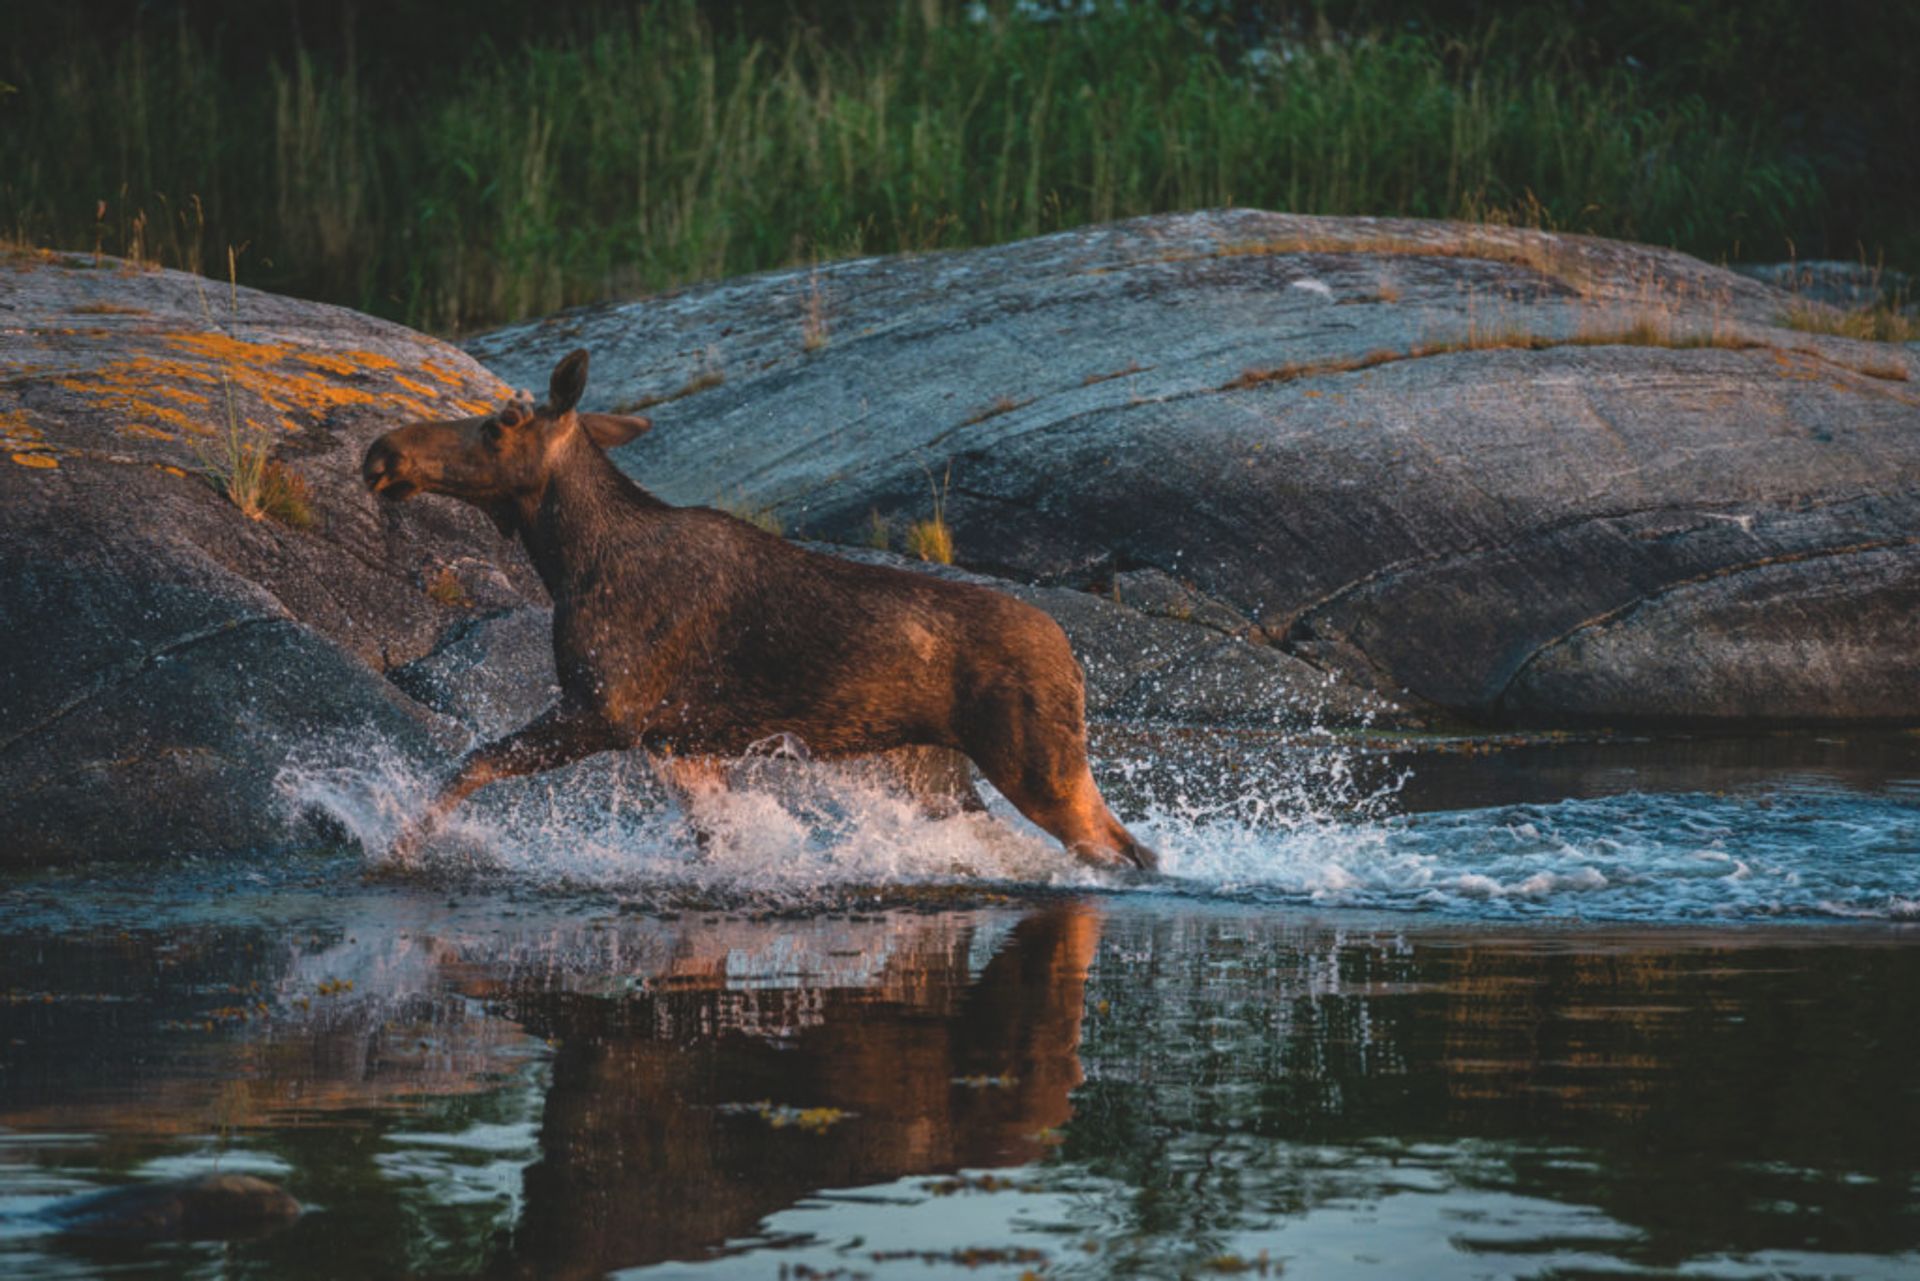 Splish splash of water is fun even the moose likes it (Source: Helena Wahlman/imagebank.sweden.se)